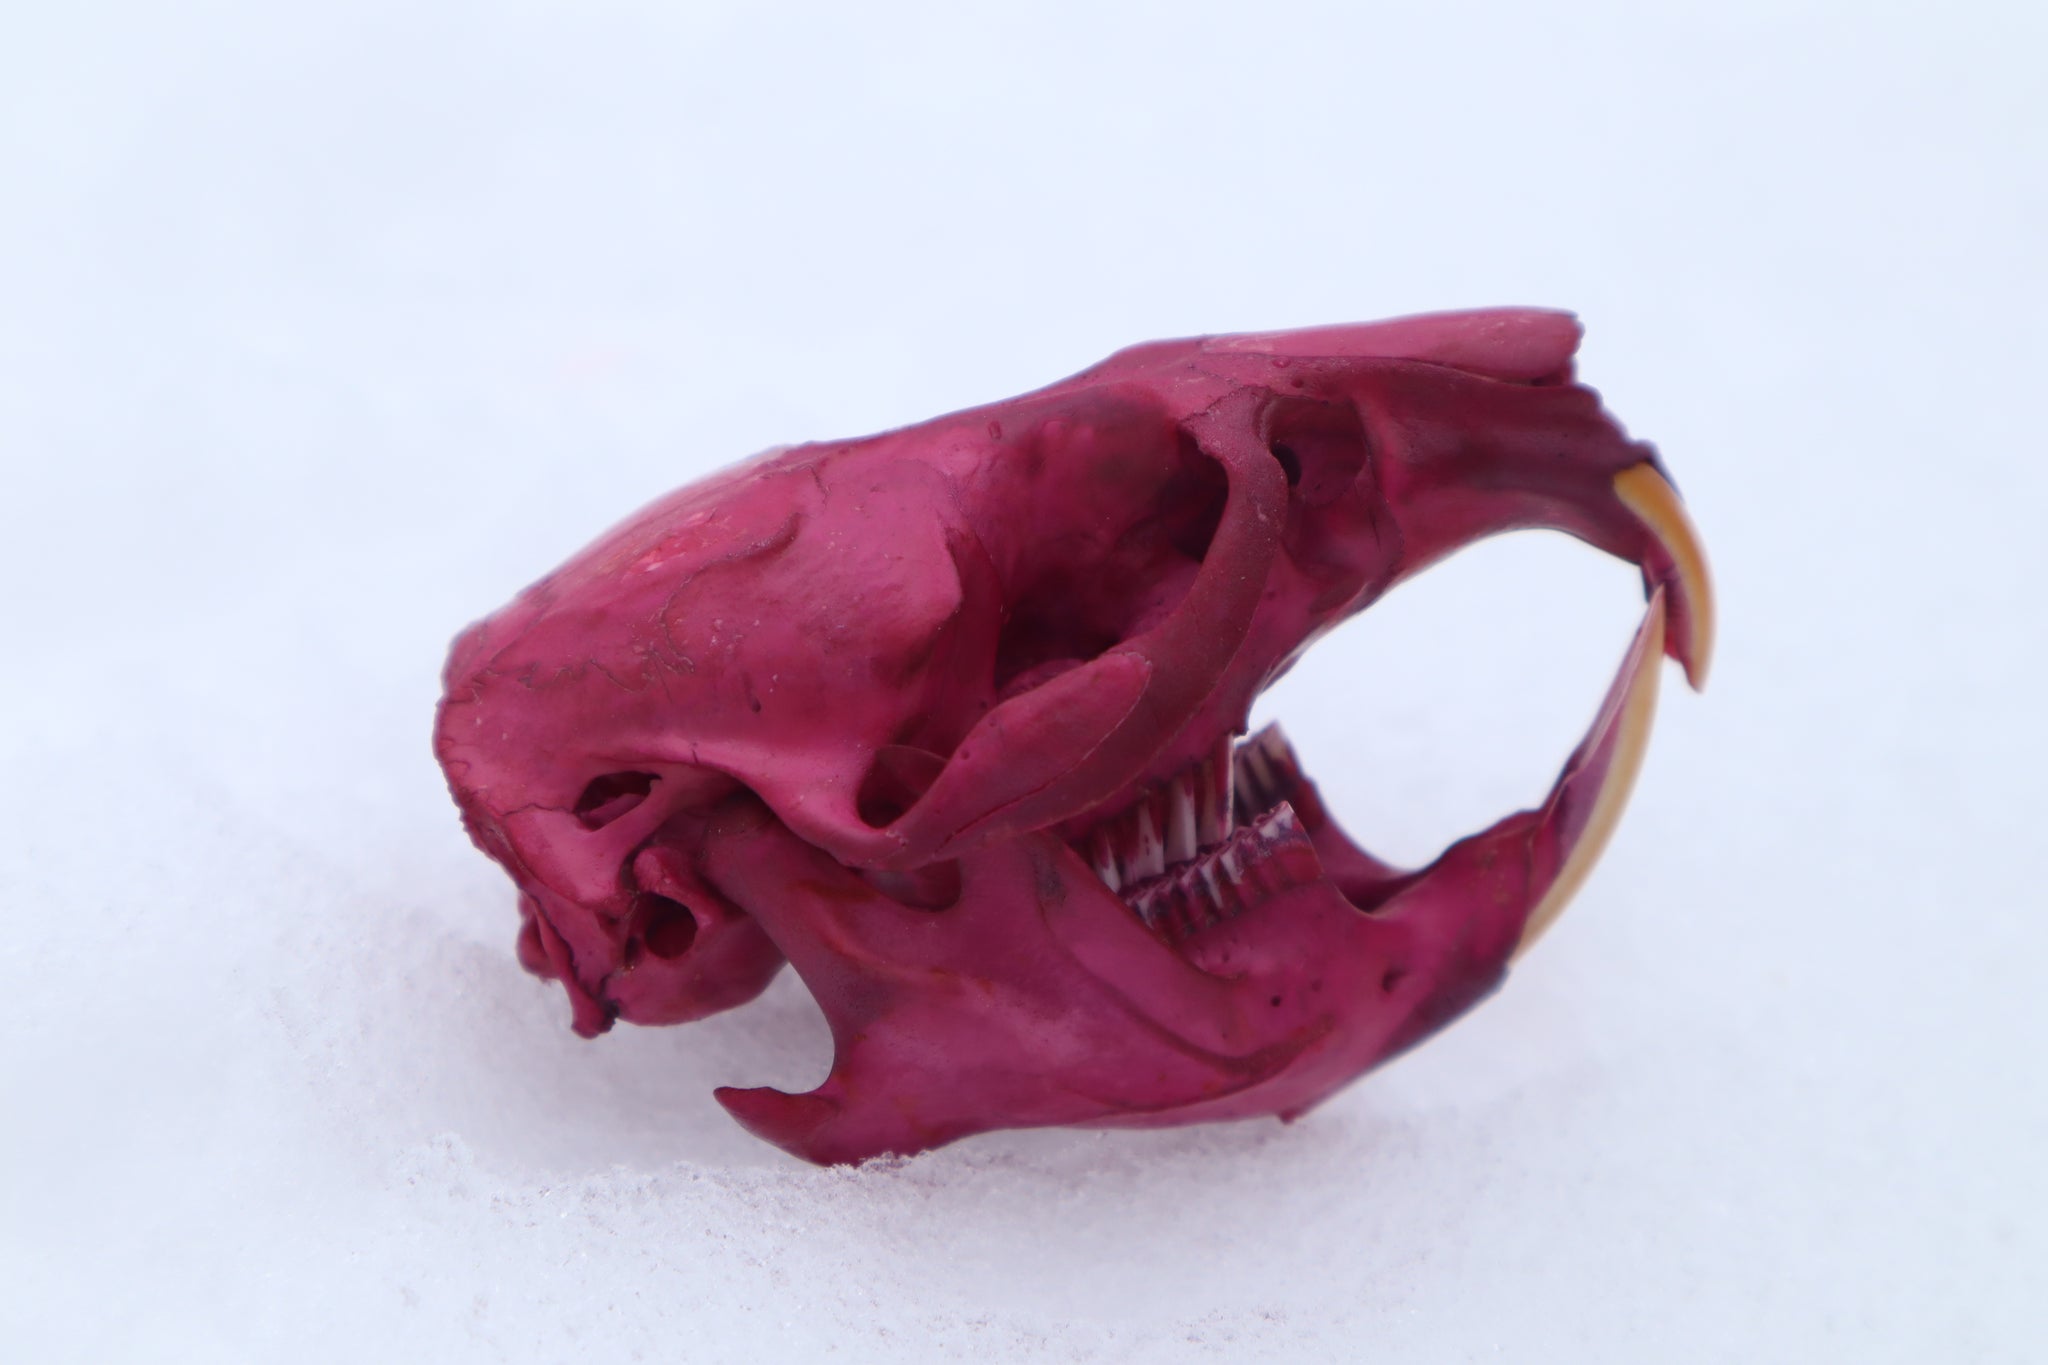 Naturally Stained Muskrat Skull